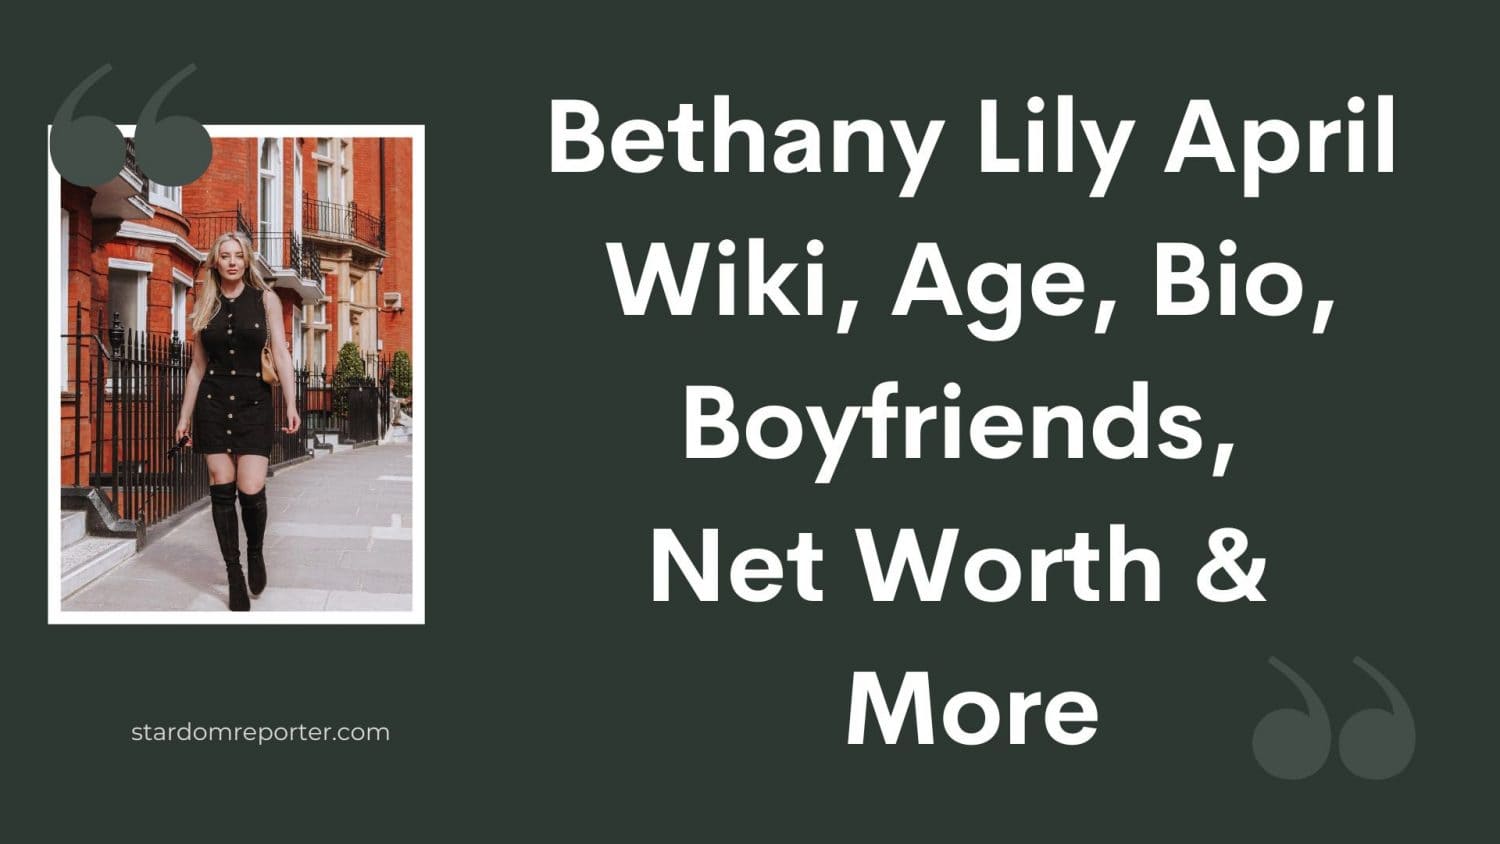 Bethany Lily April Wiki, Age, Bio, Boyfriends, Net Worth & More - 25